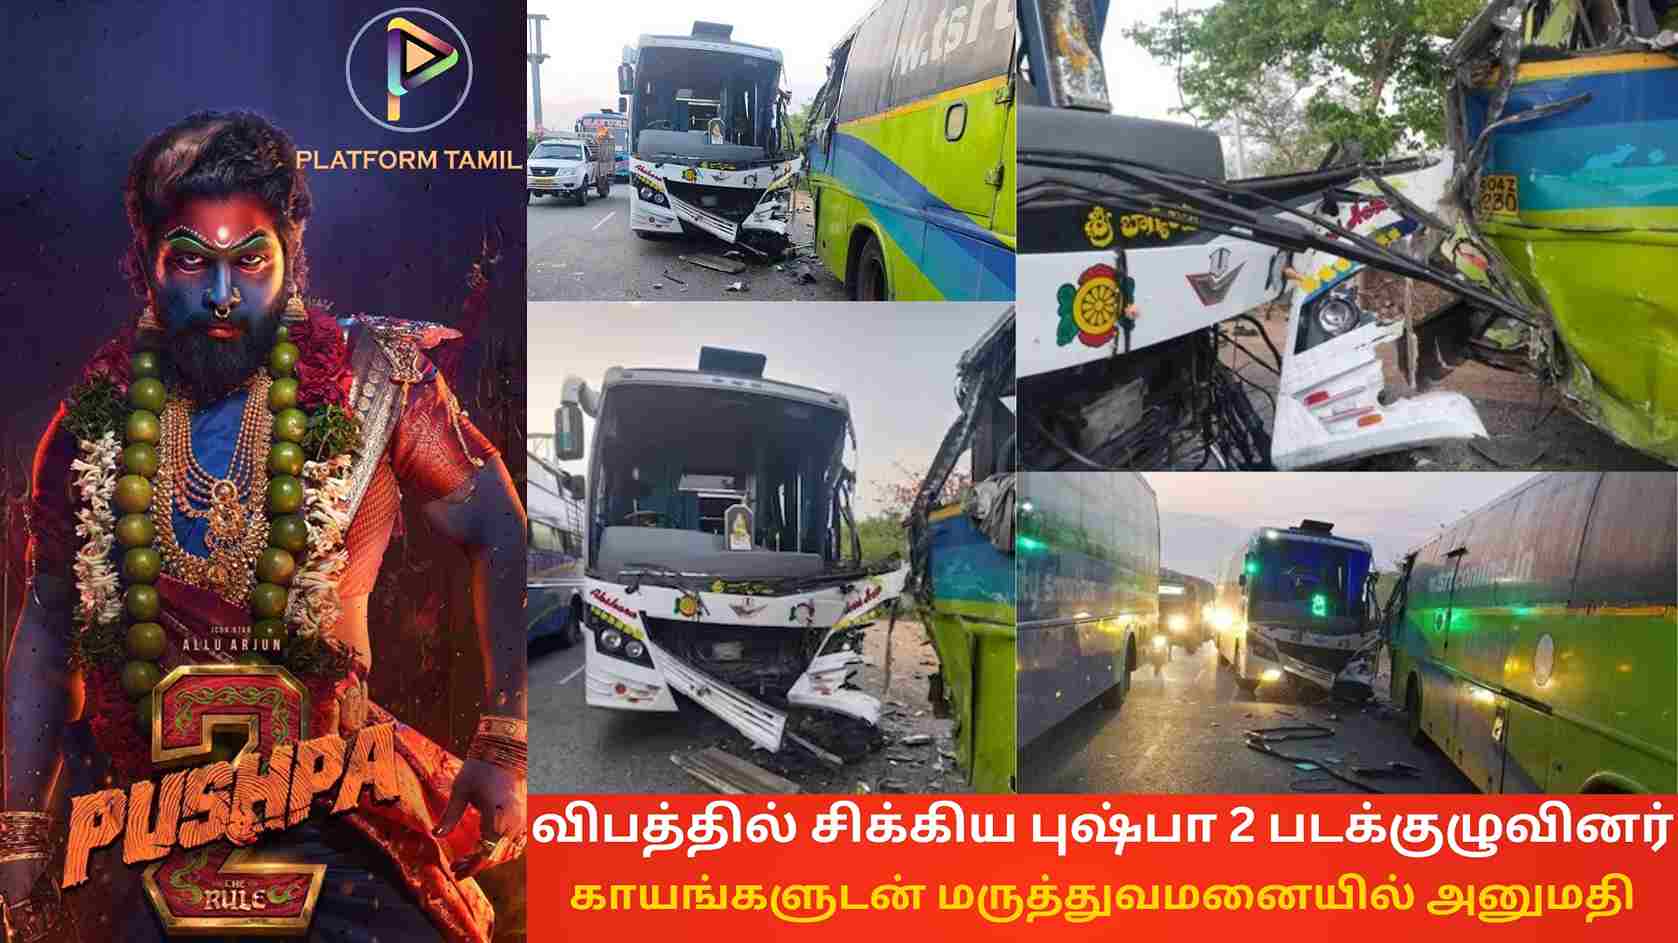 Pushpa 2 Movie Crew Met Accident - Platform Tamil